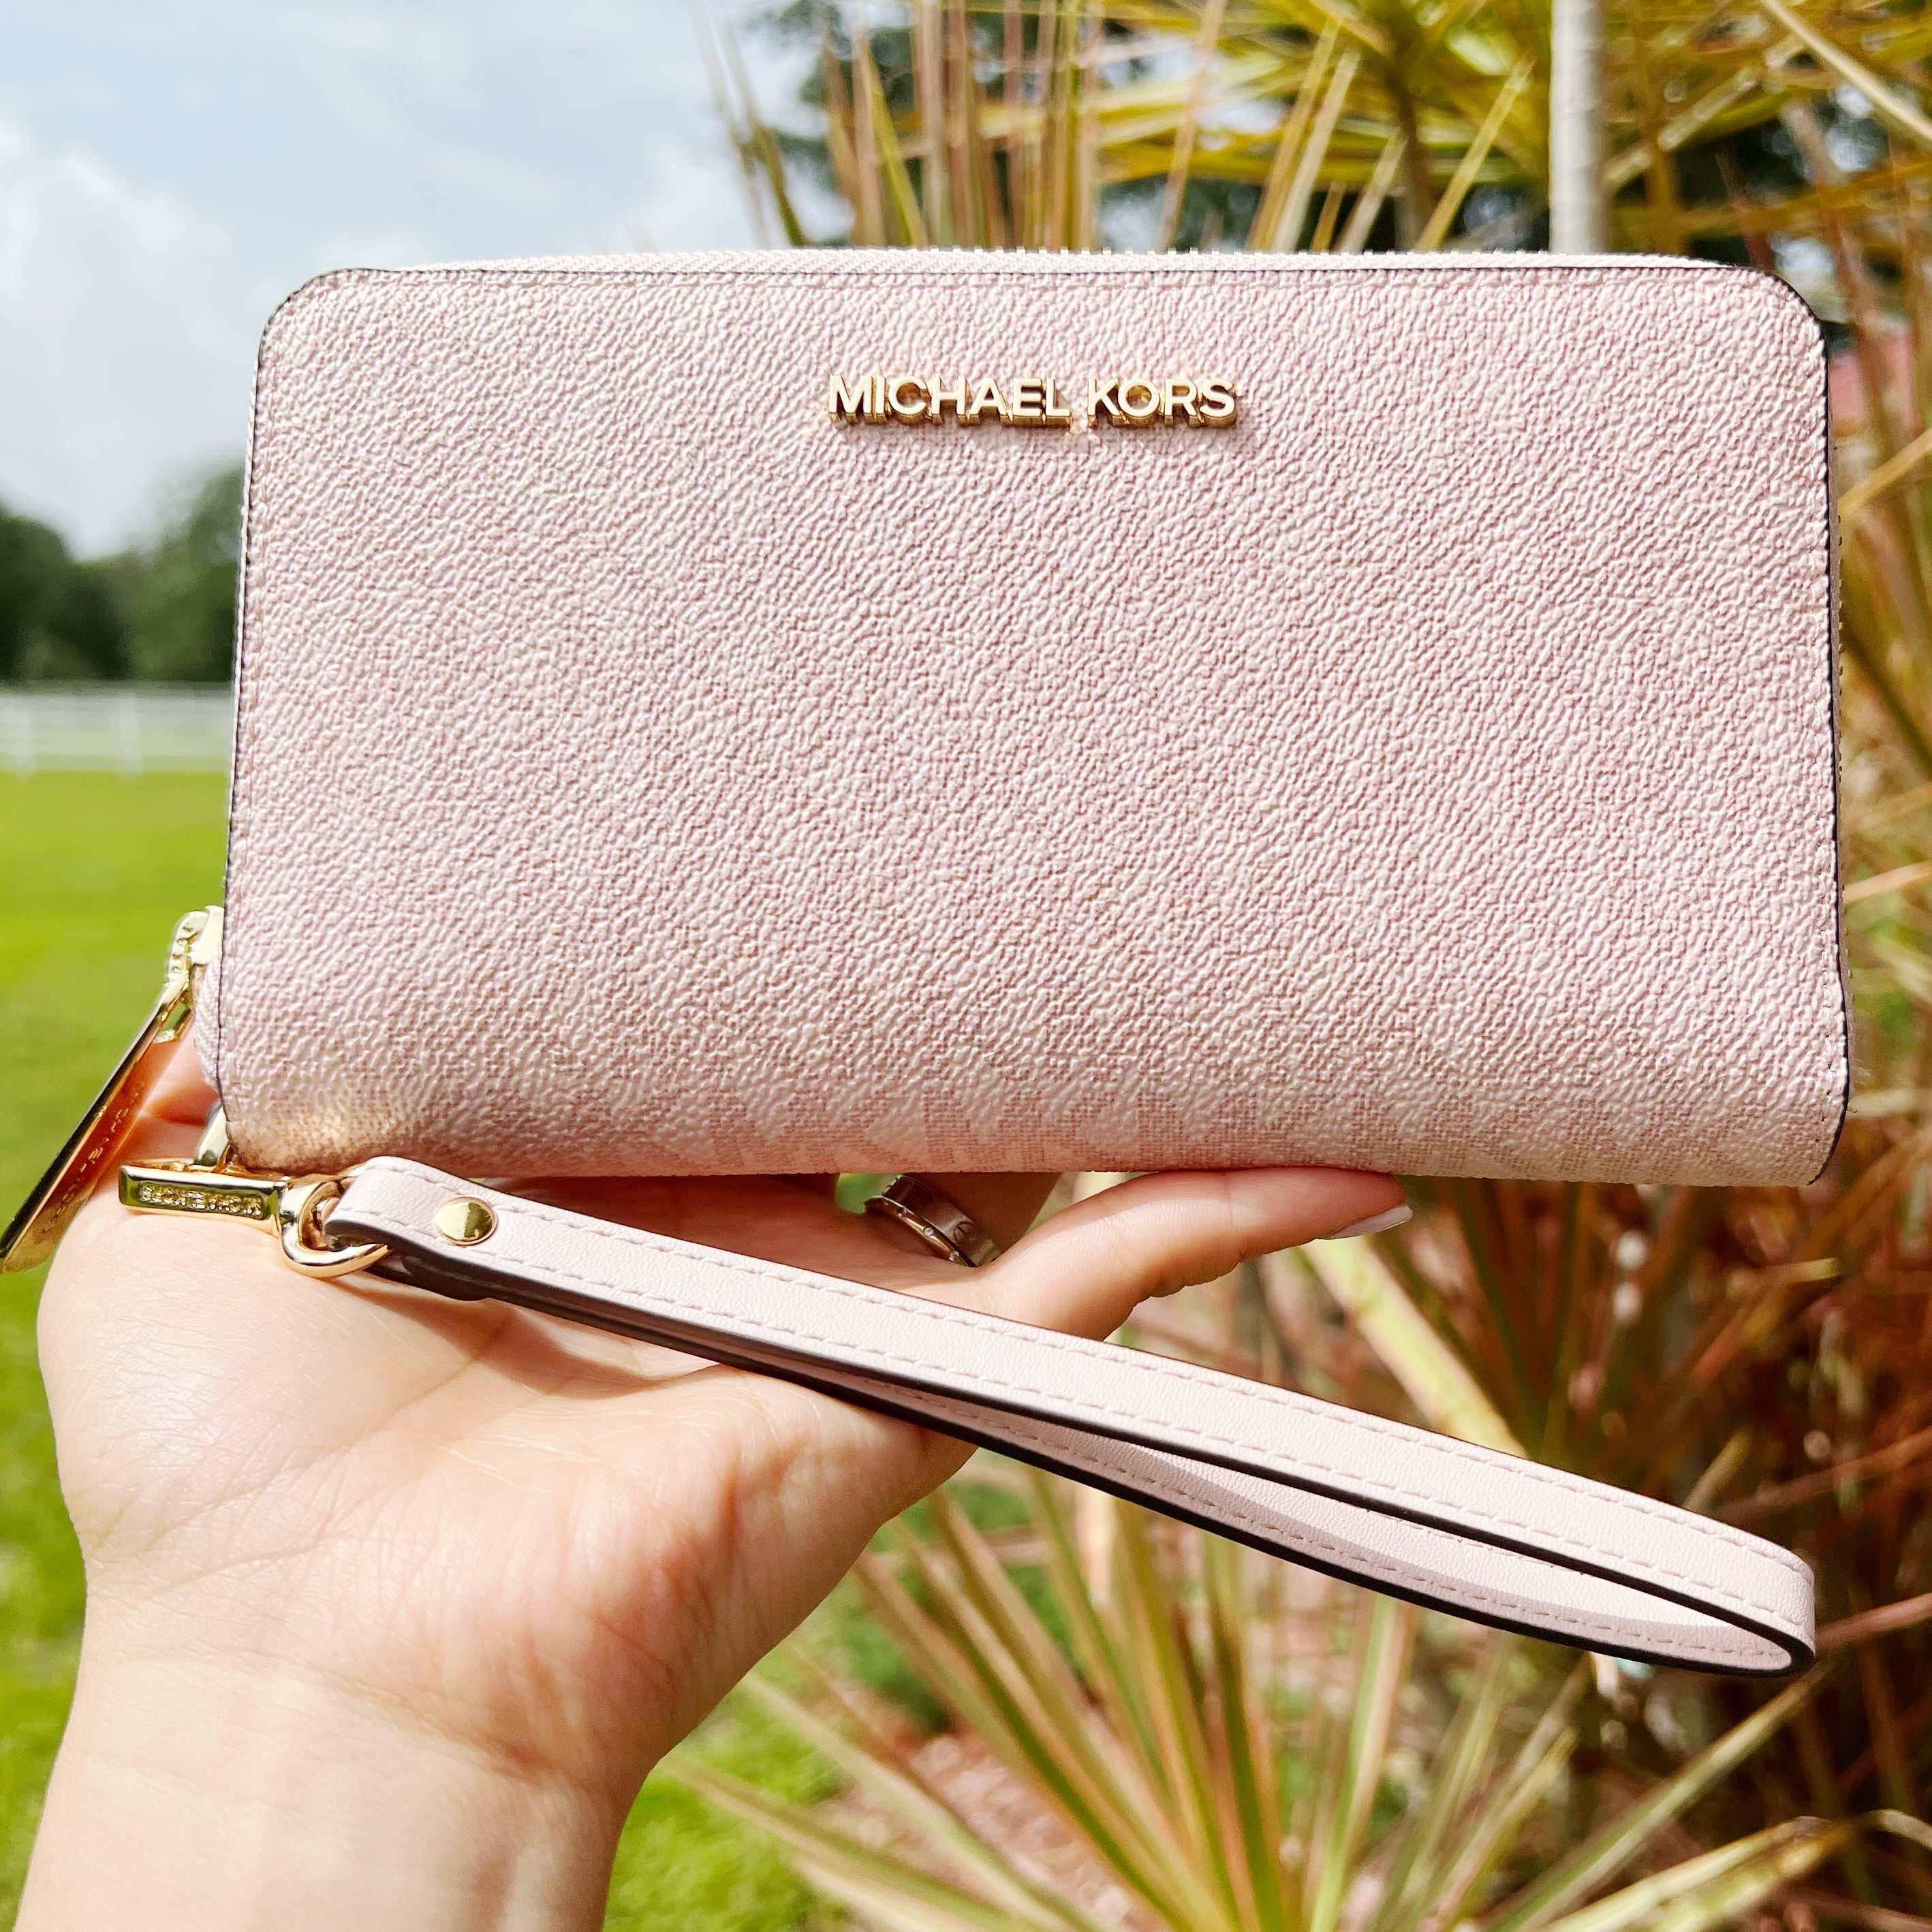 Stunning Berry Pink Michael kors Handbag | eBay